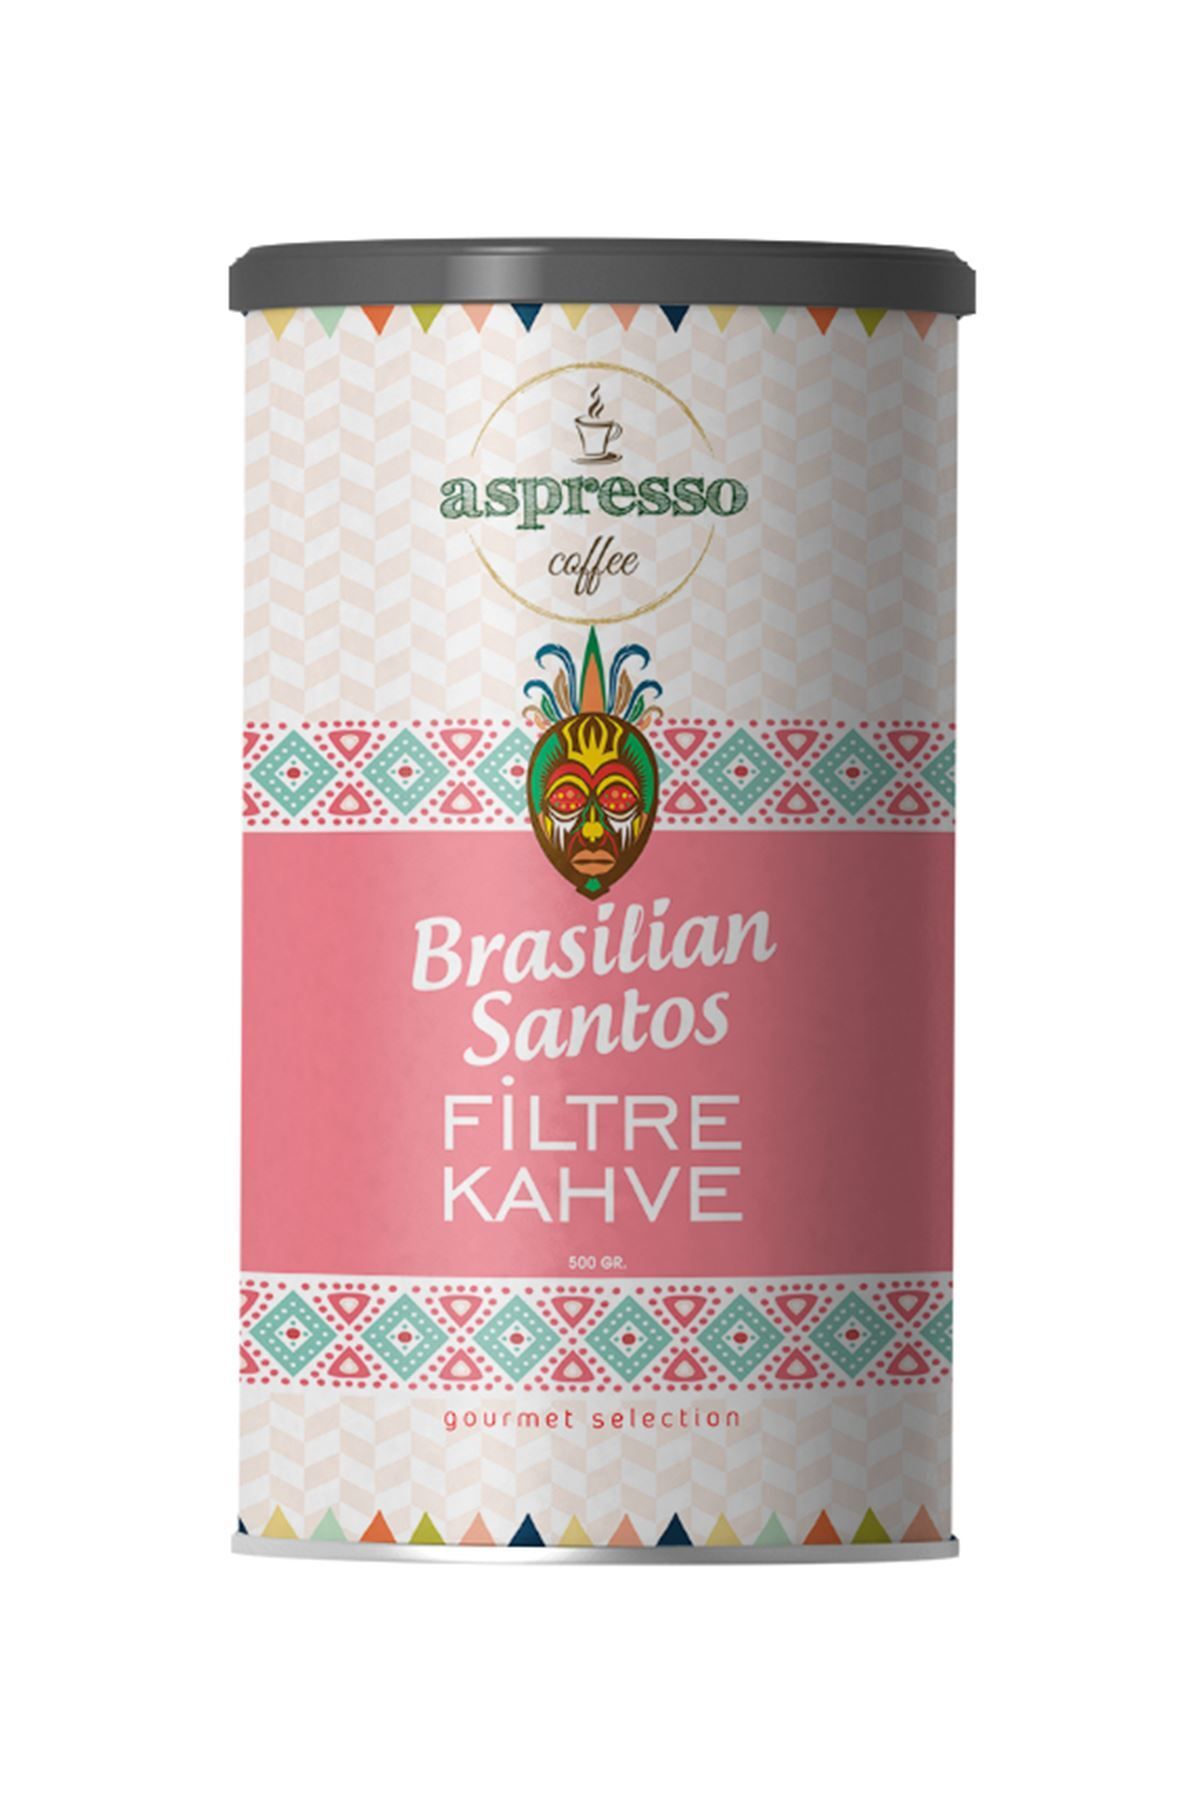 aspresso Brasilian Santos Filtre Kahve 500 Gr.